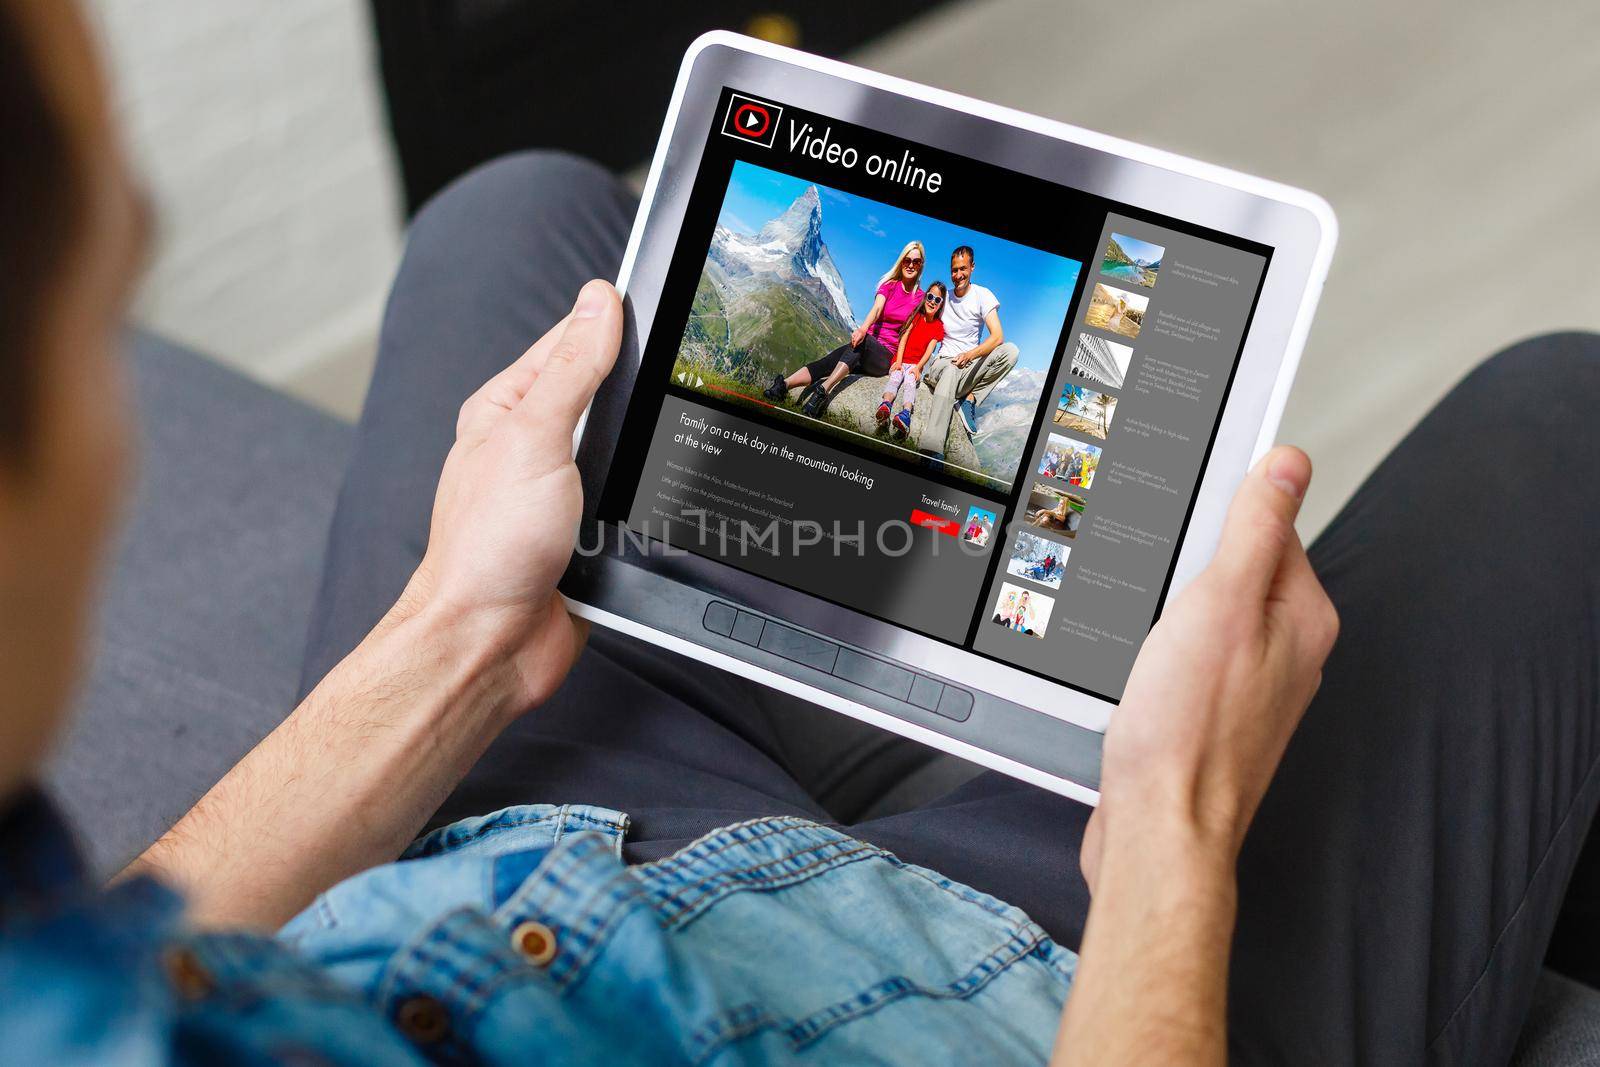 Man watching videos online on tablet by Andelov13